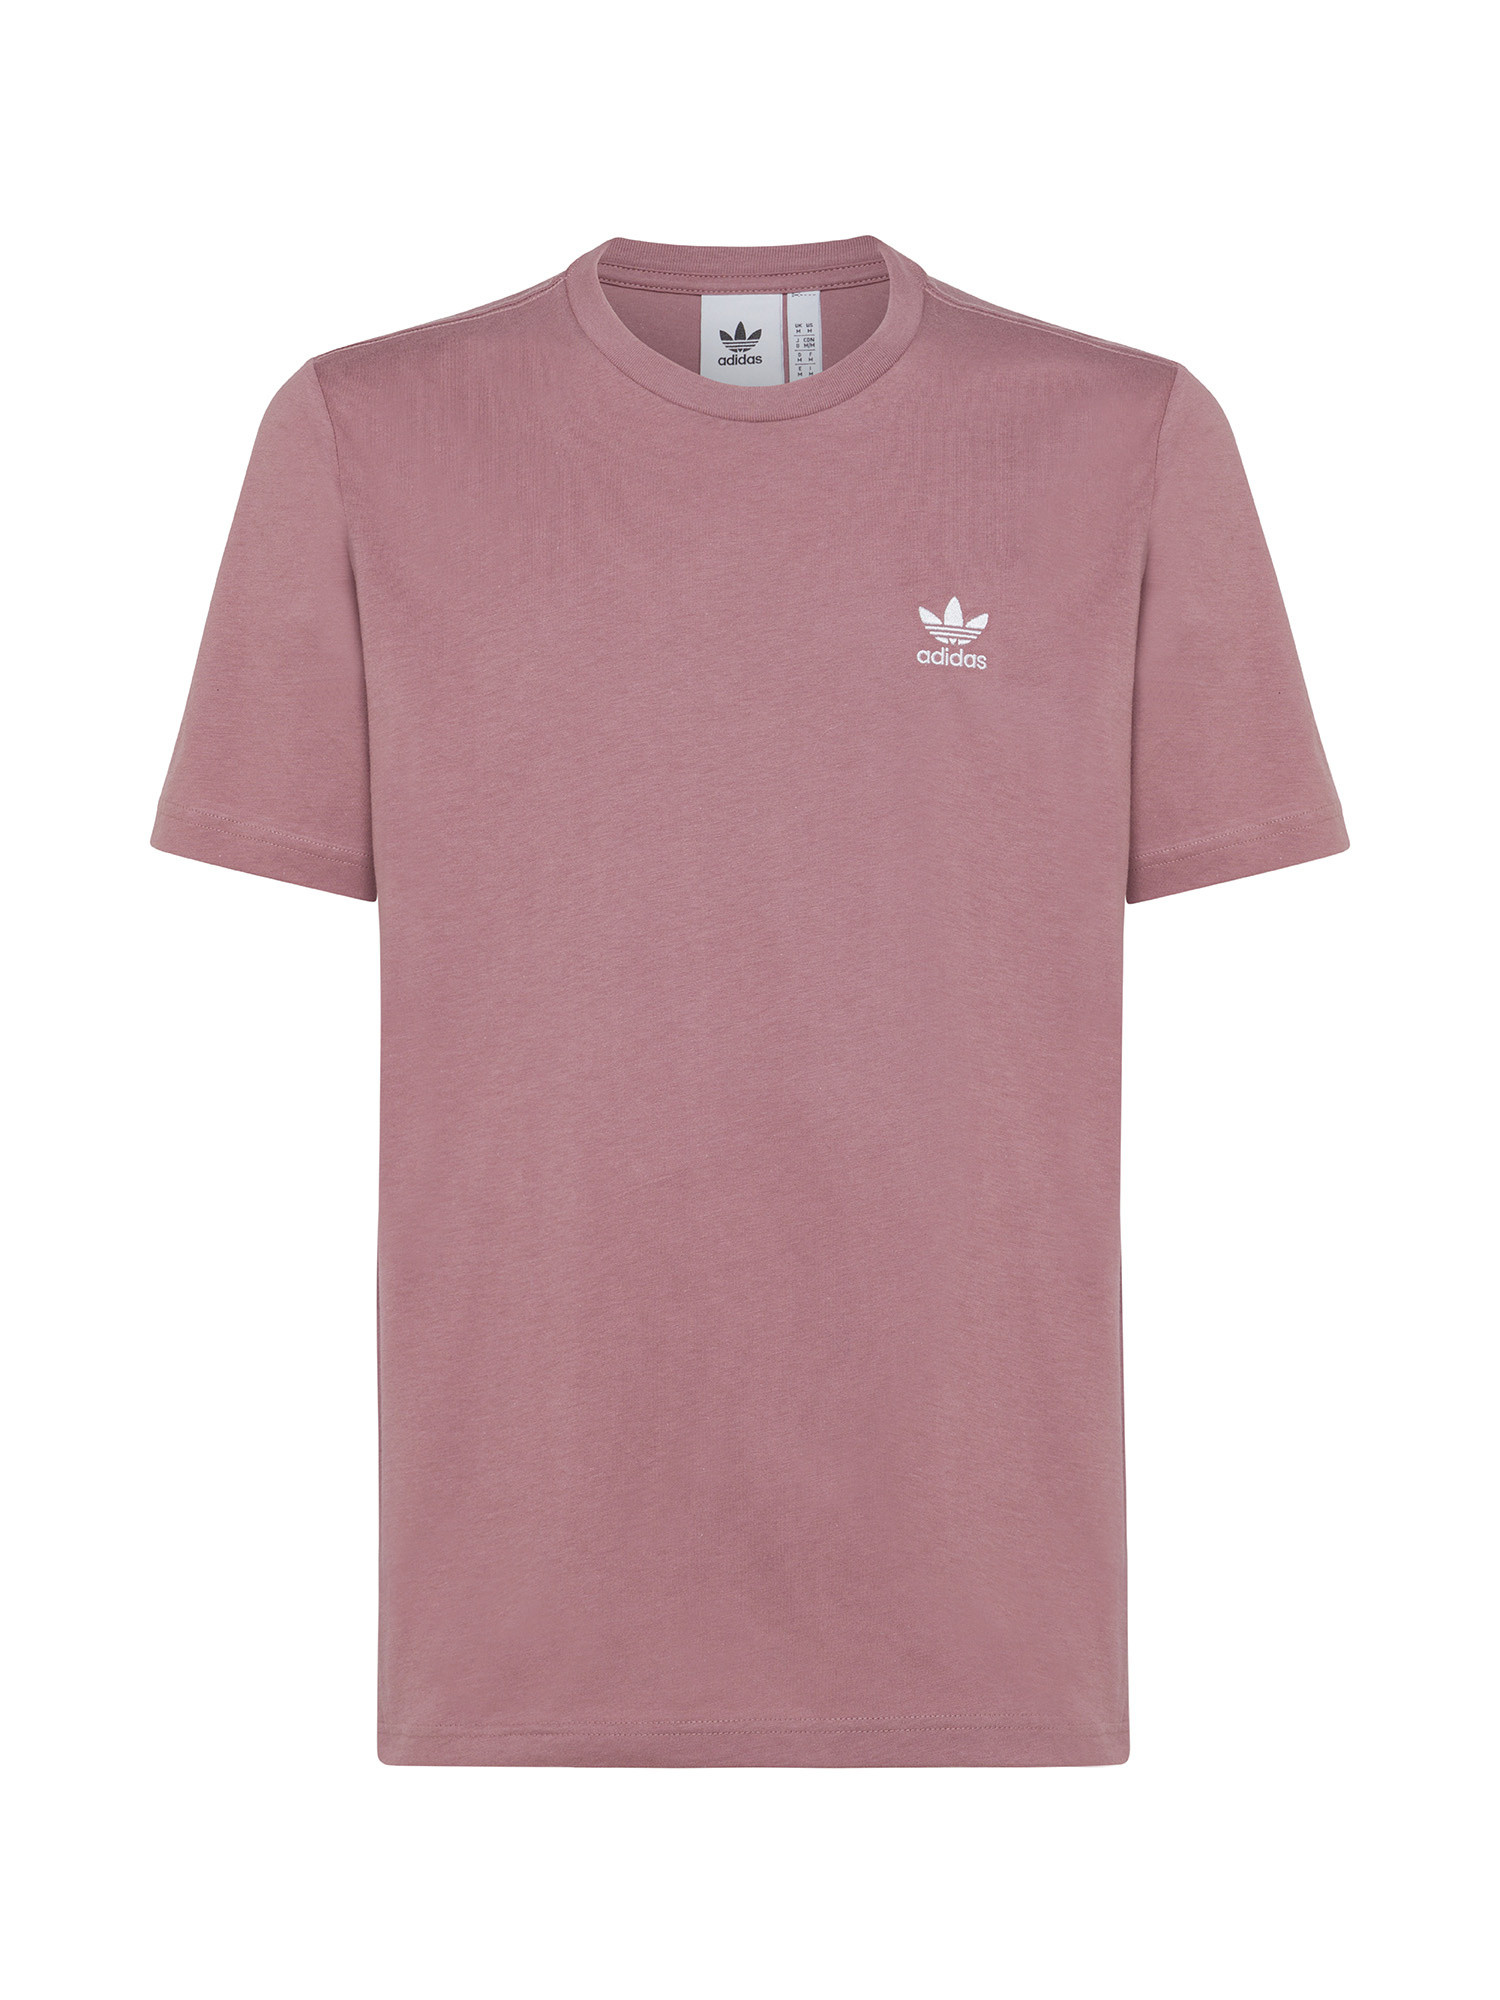 Adidas - T-shirt girocollo con logo, Rosa antico, large image number 0